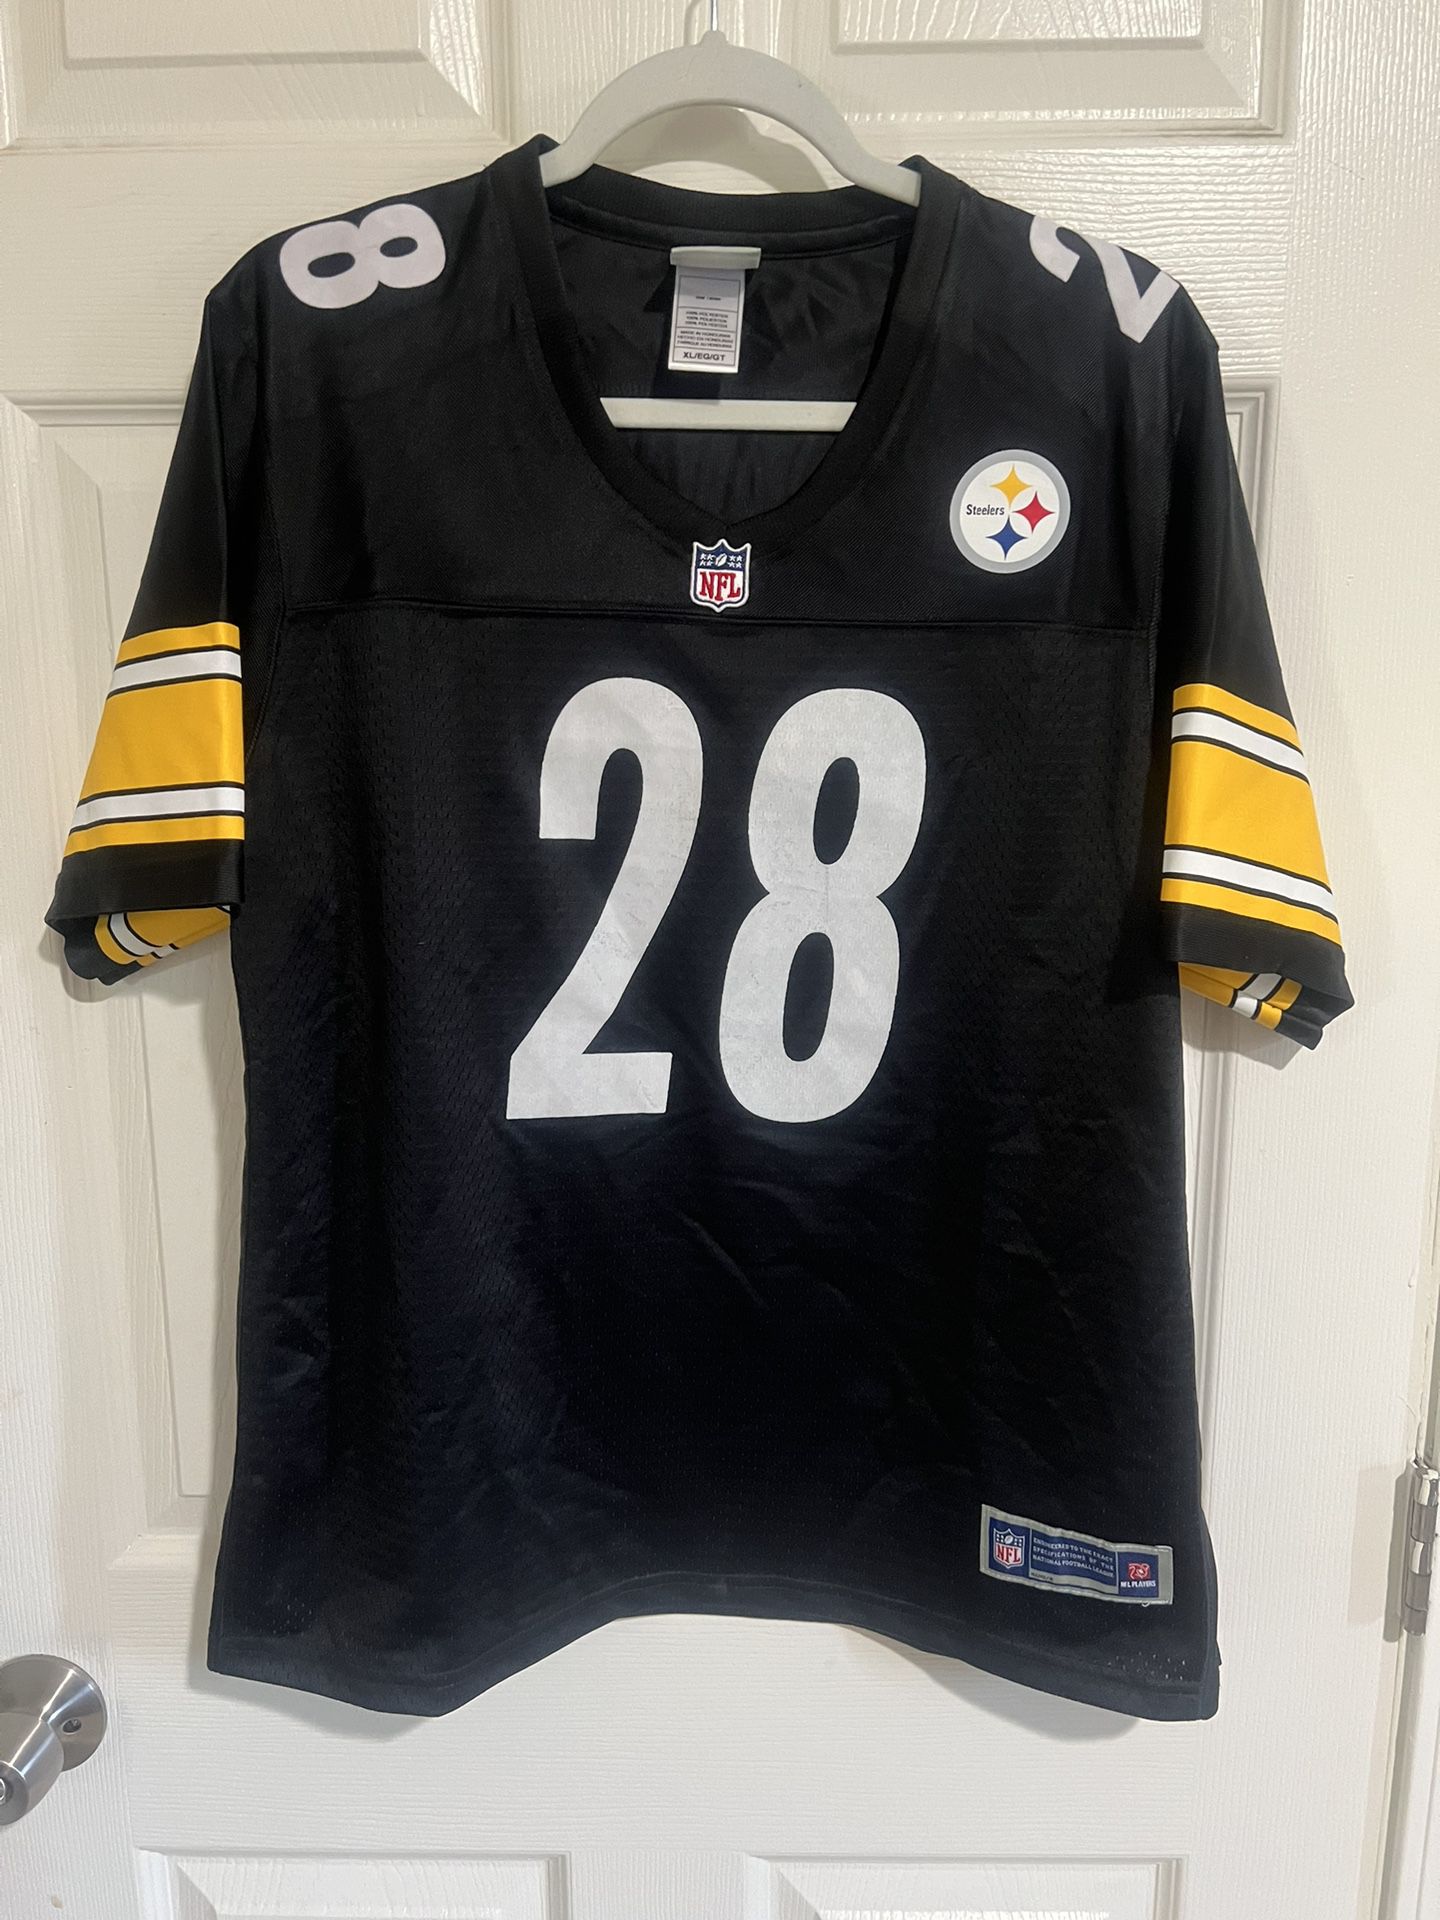 NFL Pittsburgh Steelers Sean Davis #28 jersey Size XL